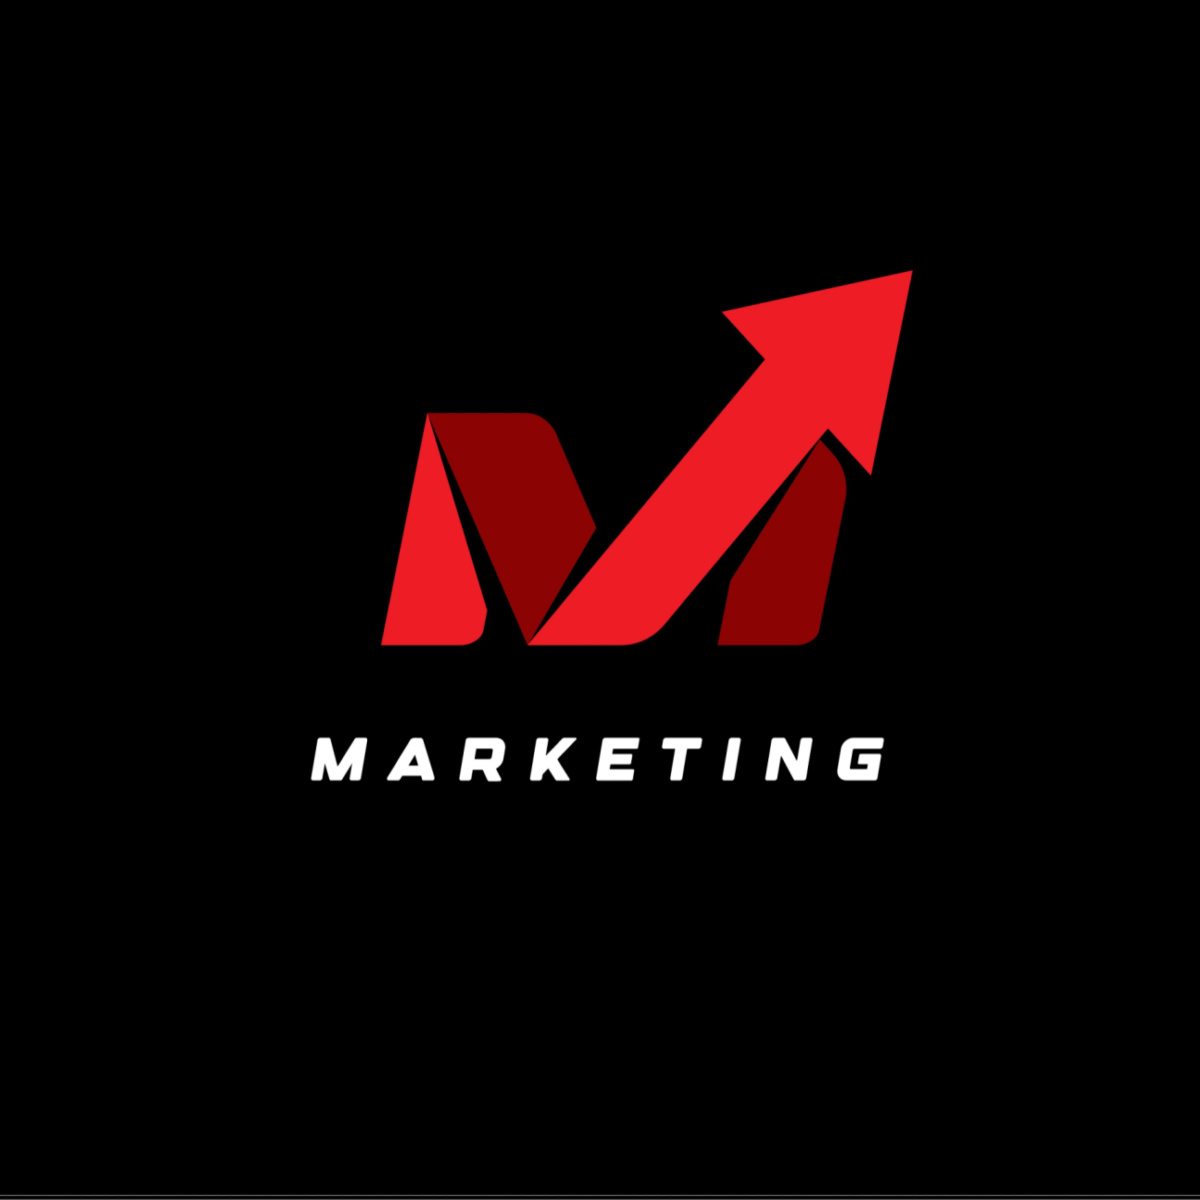 What Things Make Best Marketing Logo Design